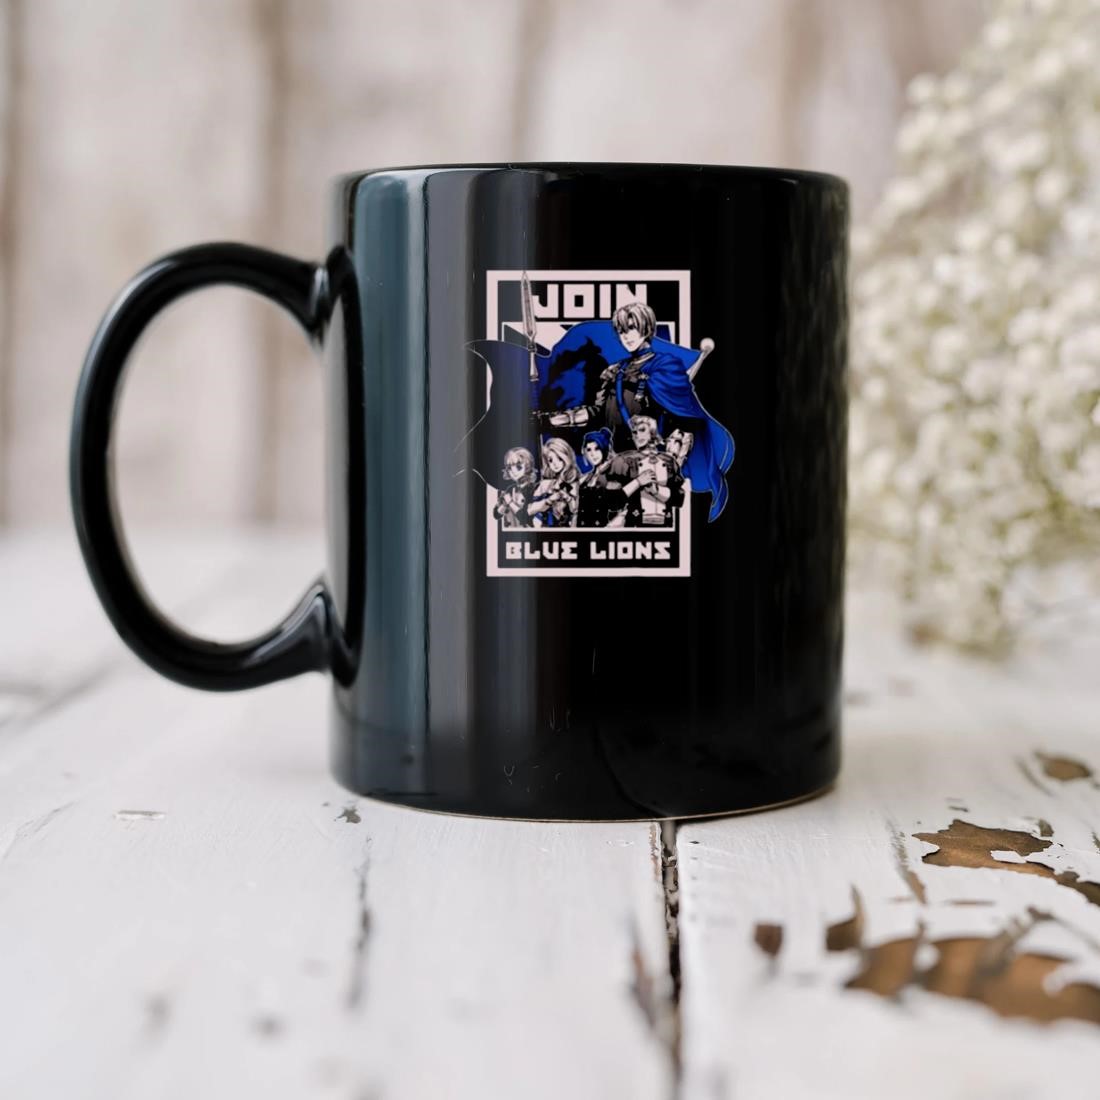 Join Blue Lions Fire Emblem Mug biu.jpg